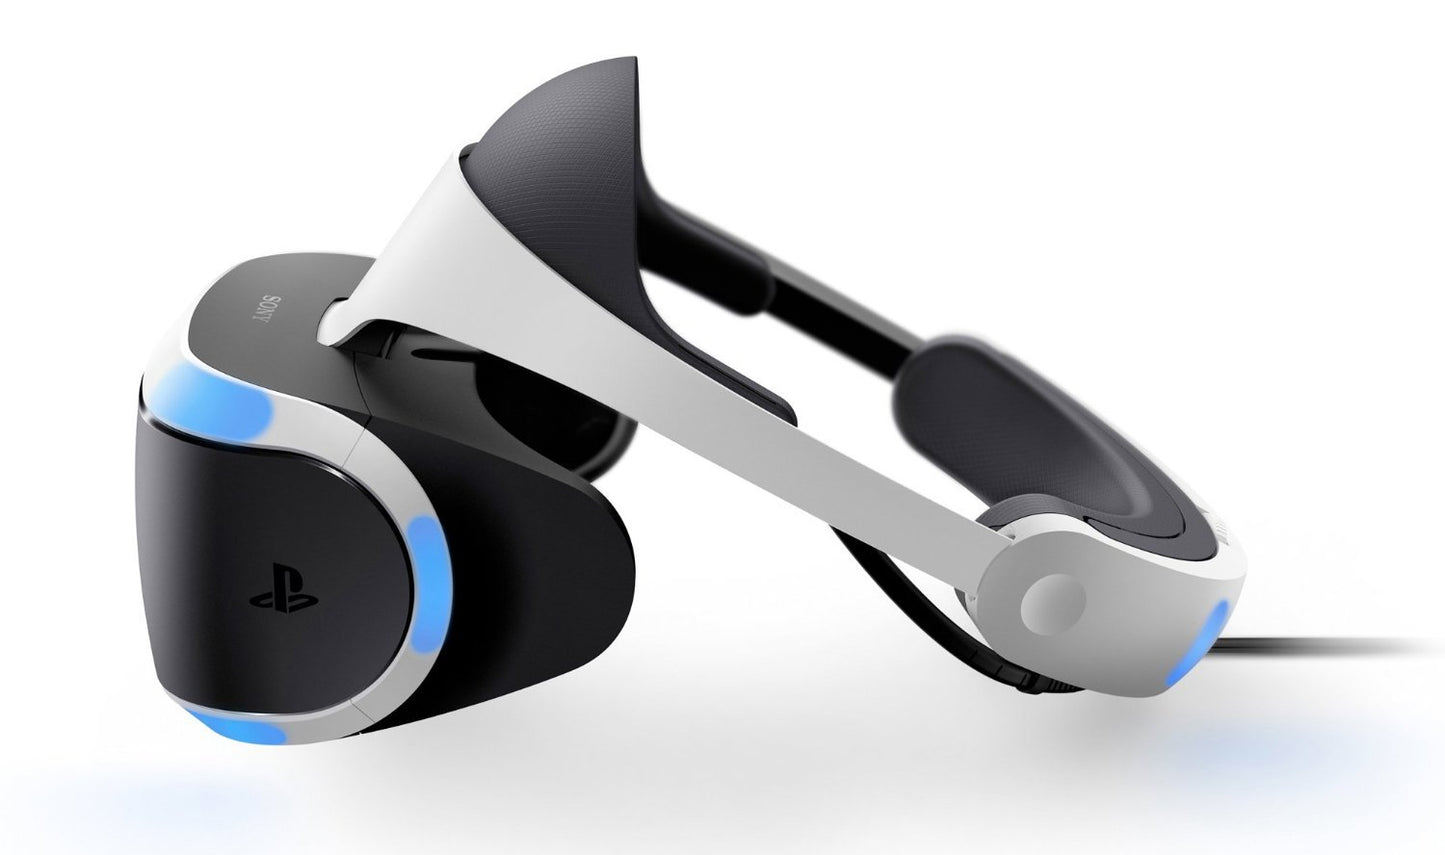 Sony PlayStation VR Rush of Blood Starter Bundle 4 items:VR Headset,Move Controller,PlayStation Camera Motion Sensor, PSVR Until Dawn: Rush of Blood [video game]